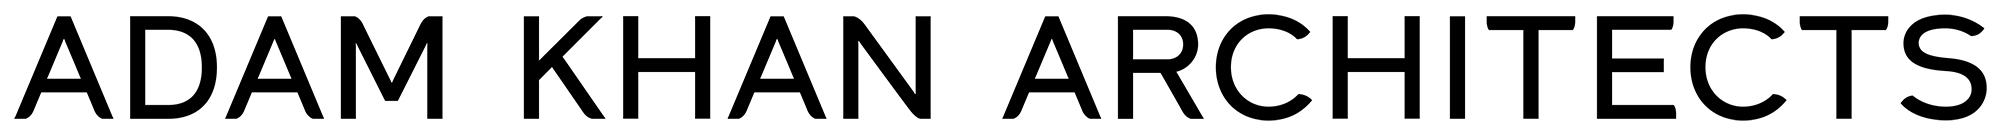 logo for Adam Khan Architects